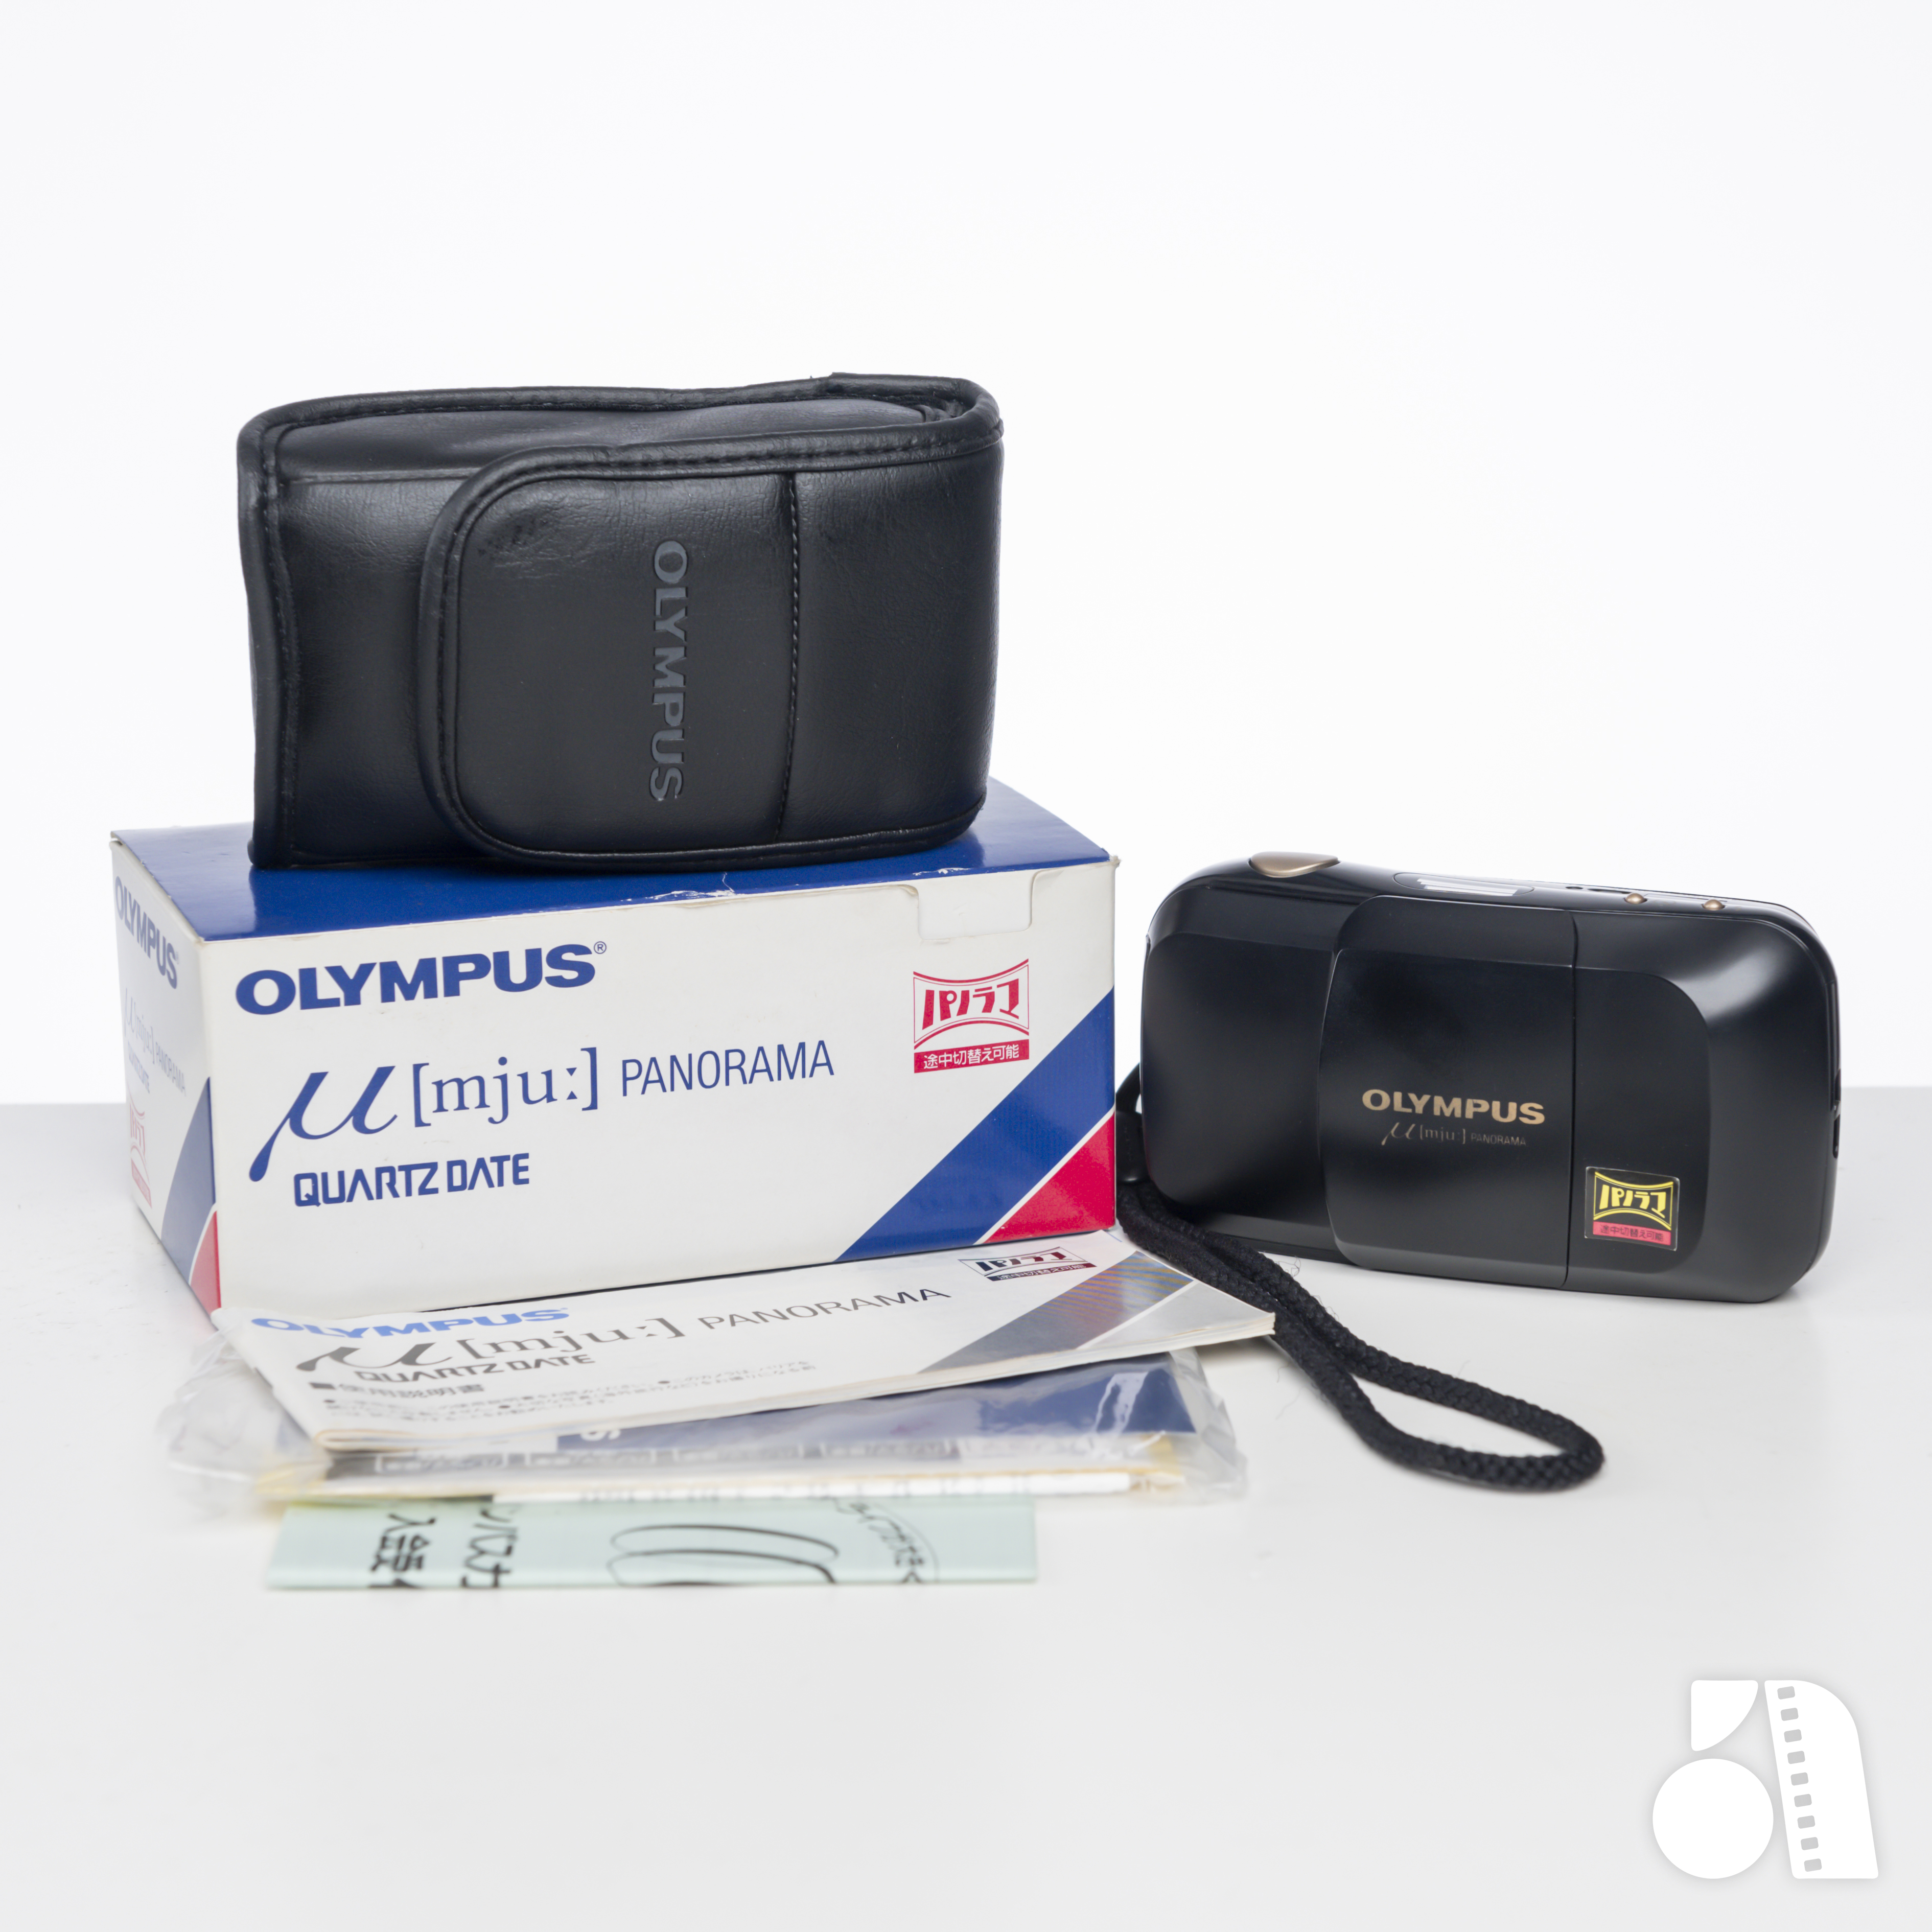 Olympus mju Panorama 原裝盒, 說明書, 機套, 手繩, 送一粒CR123A